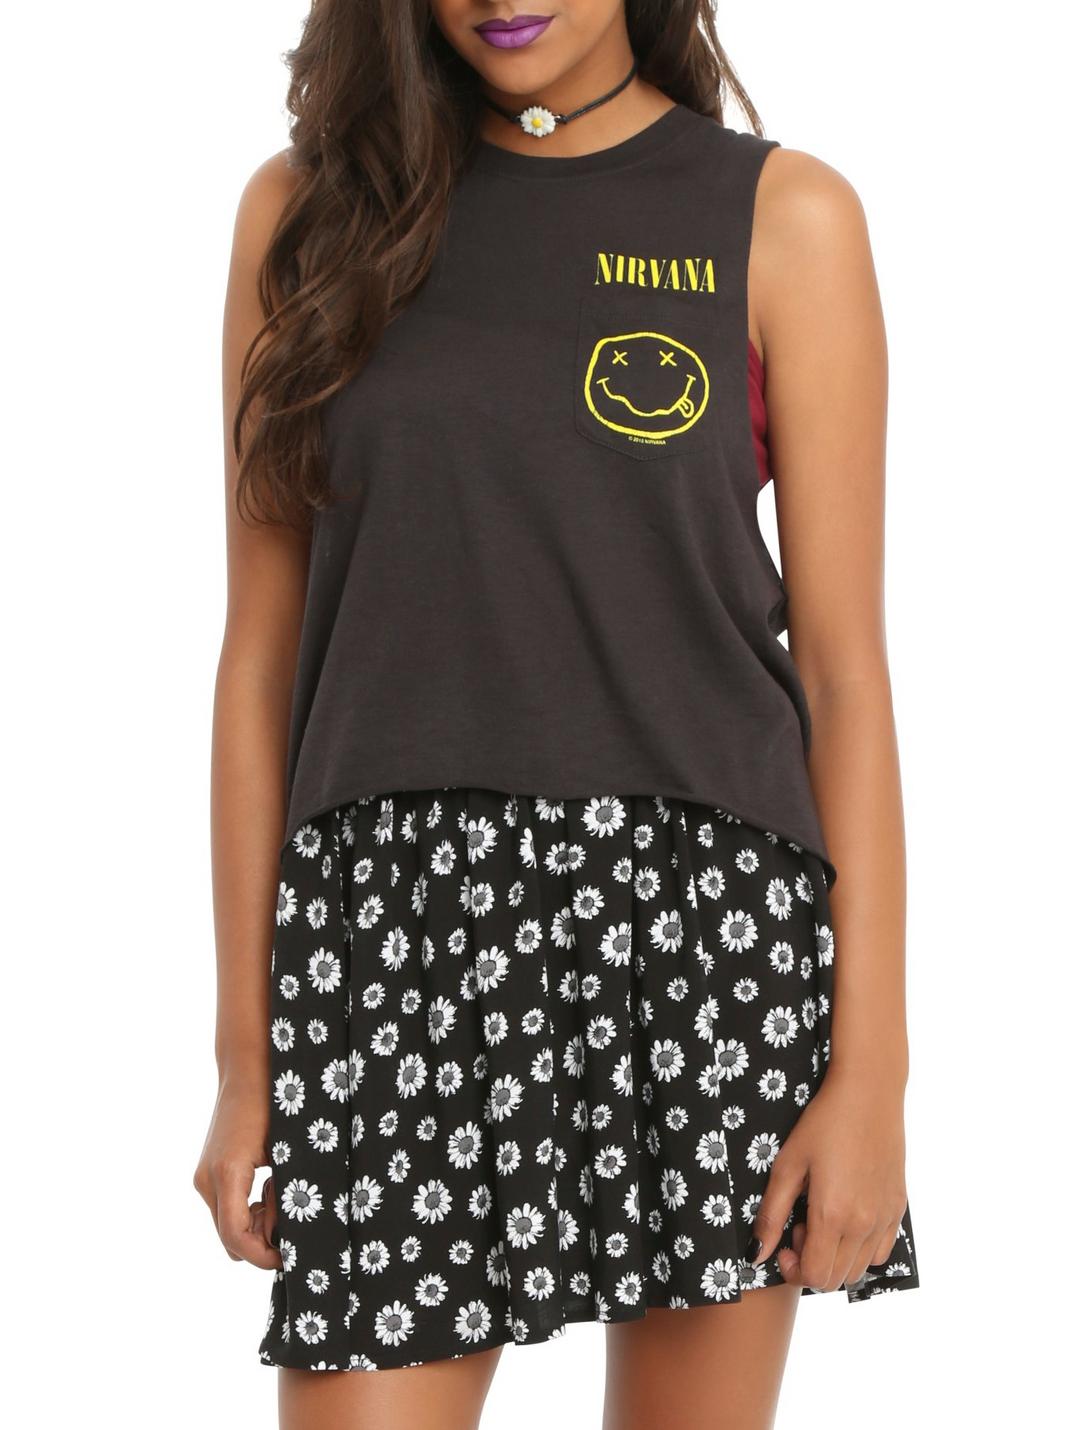 Nirvana Smiley Pocket Girls Crop Muscle Top, BLACK, hi-res